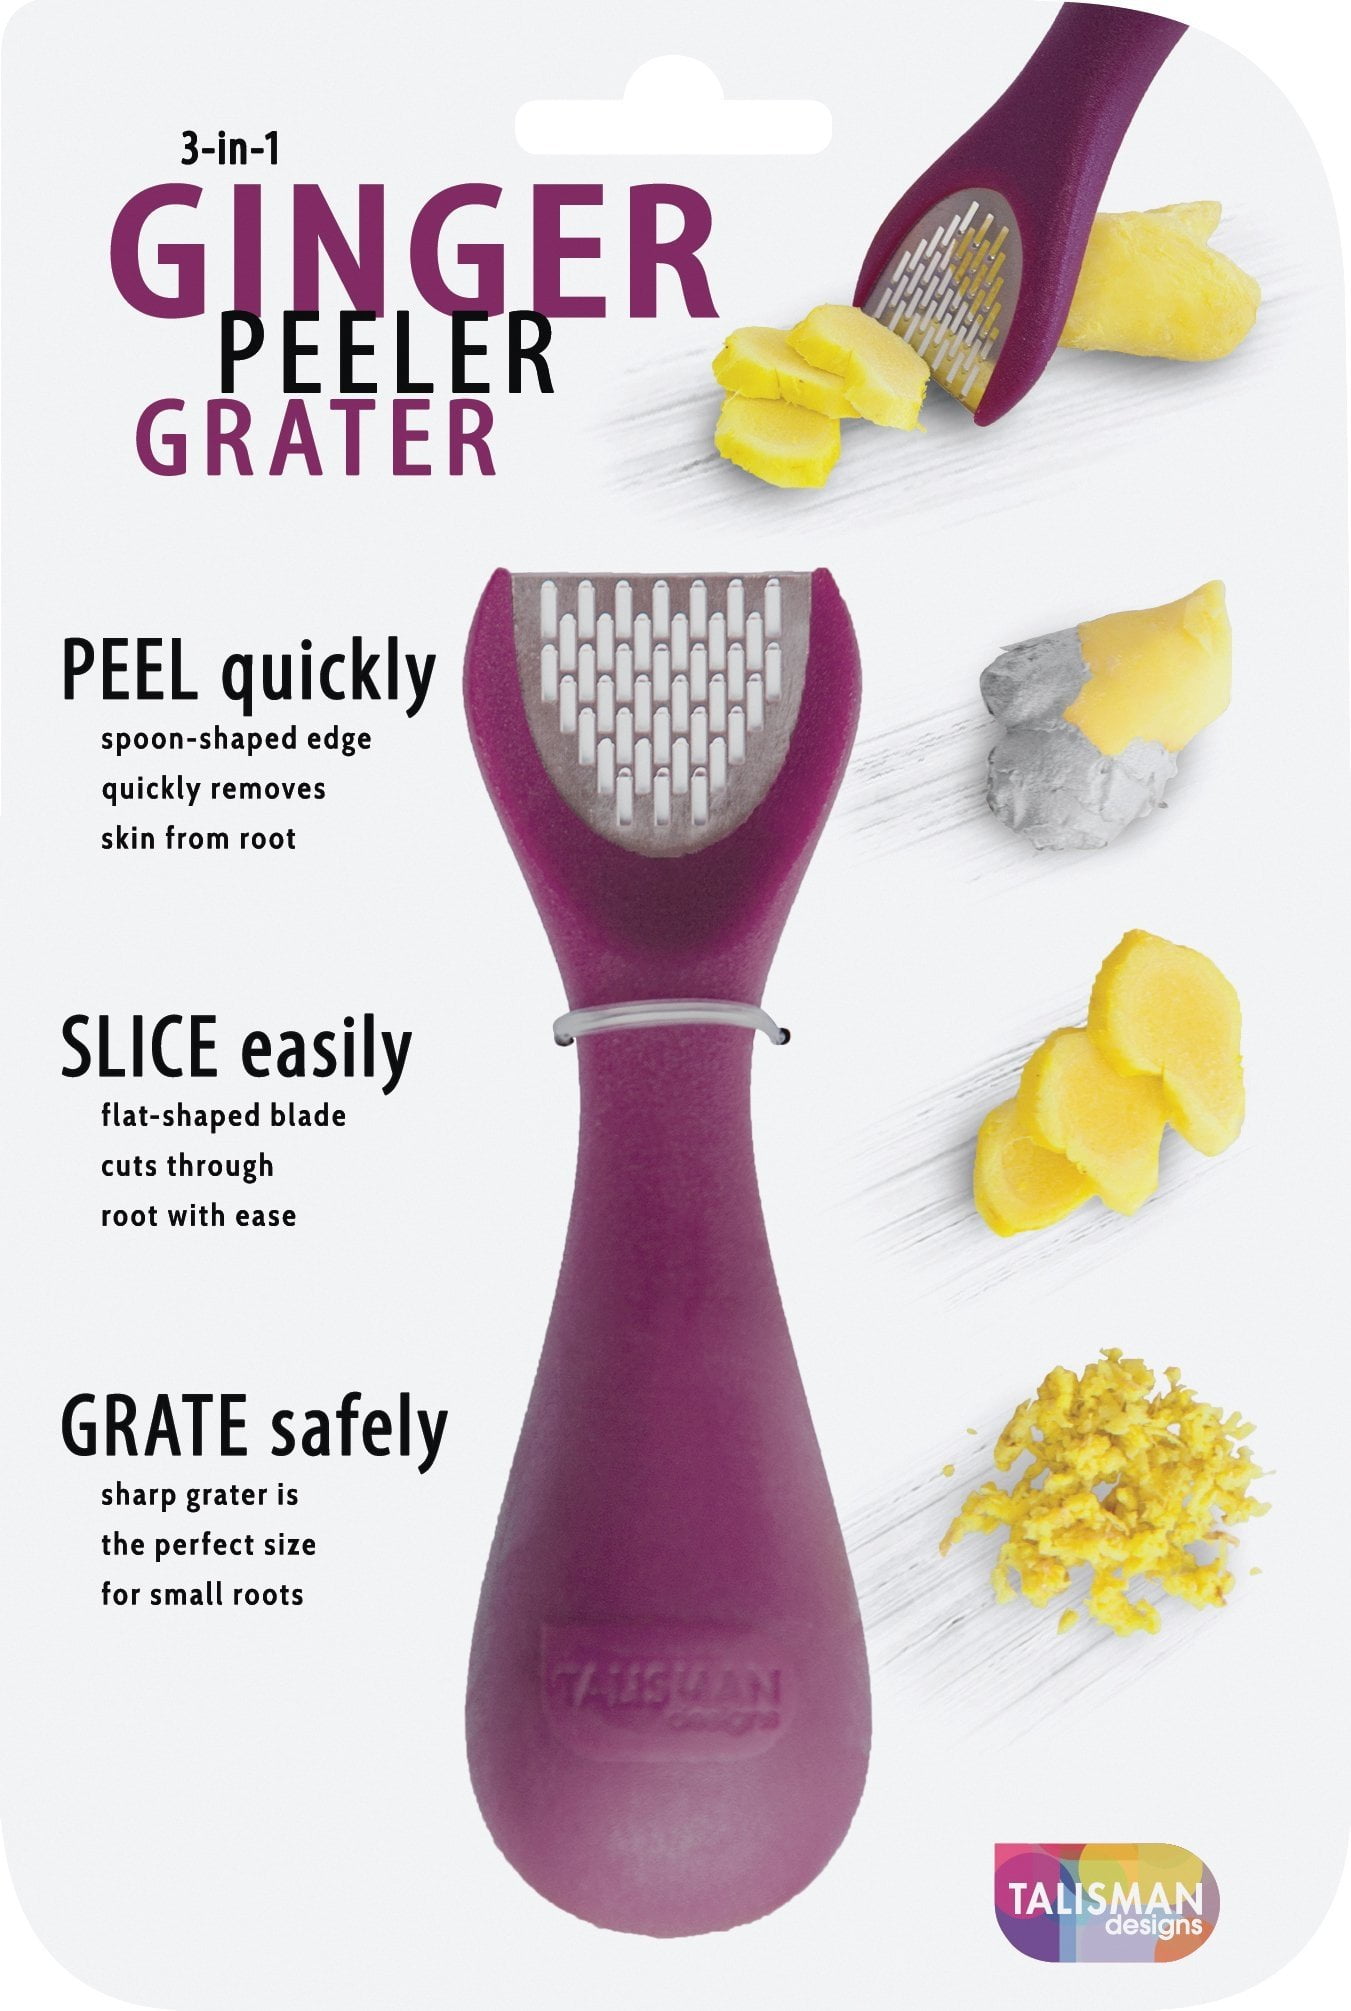 3-in-1 Multifunctional Fruit & Vegetable Peeler, Paring Knife, Grater &  Shredder - The Ultimate Kitchen Tool!